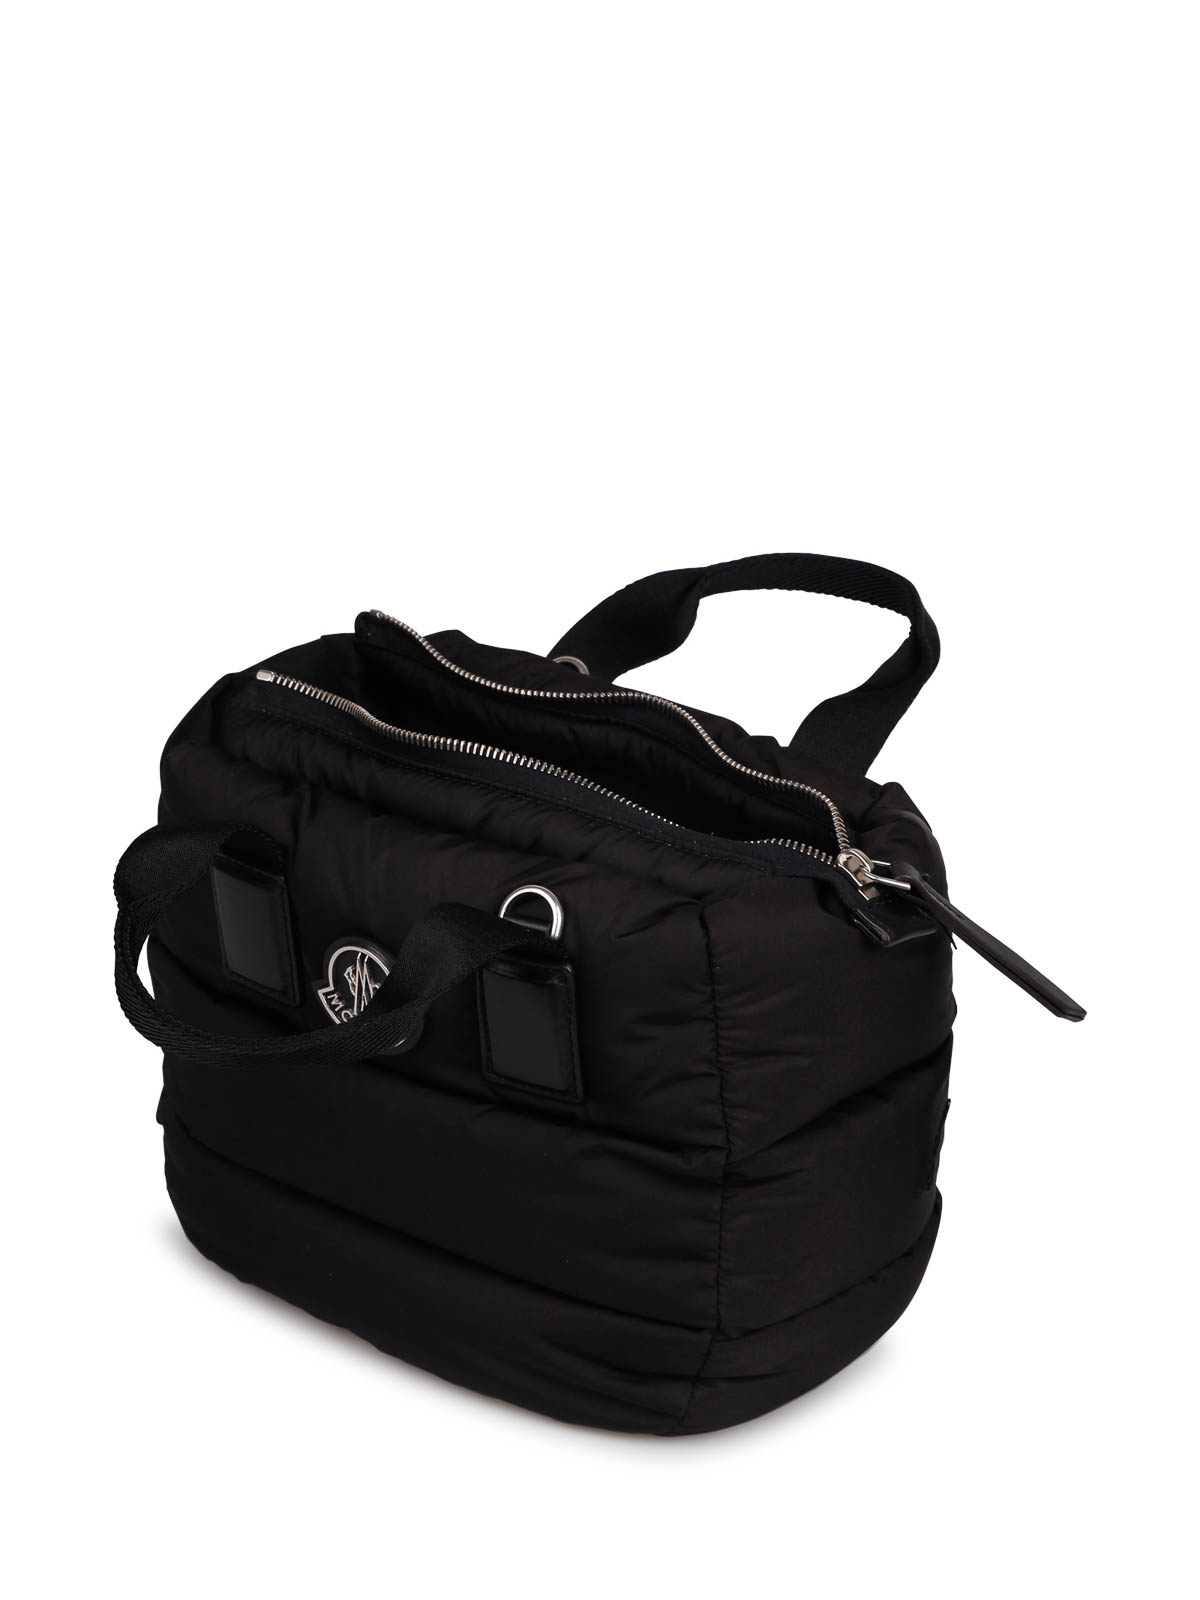 Caradoc Mini Leather Tote Bag in Black - Moncler